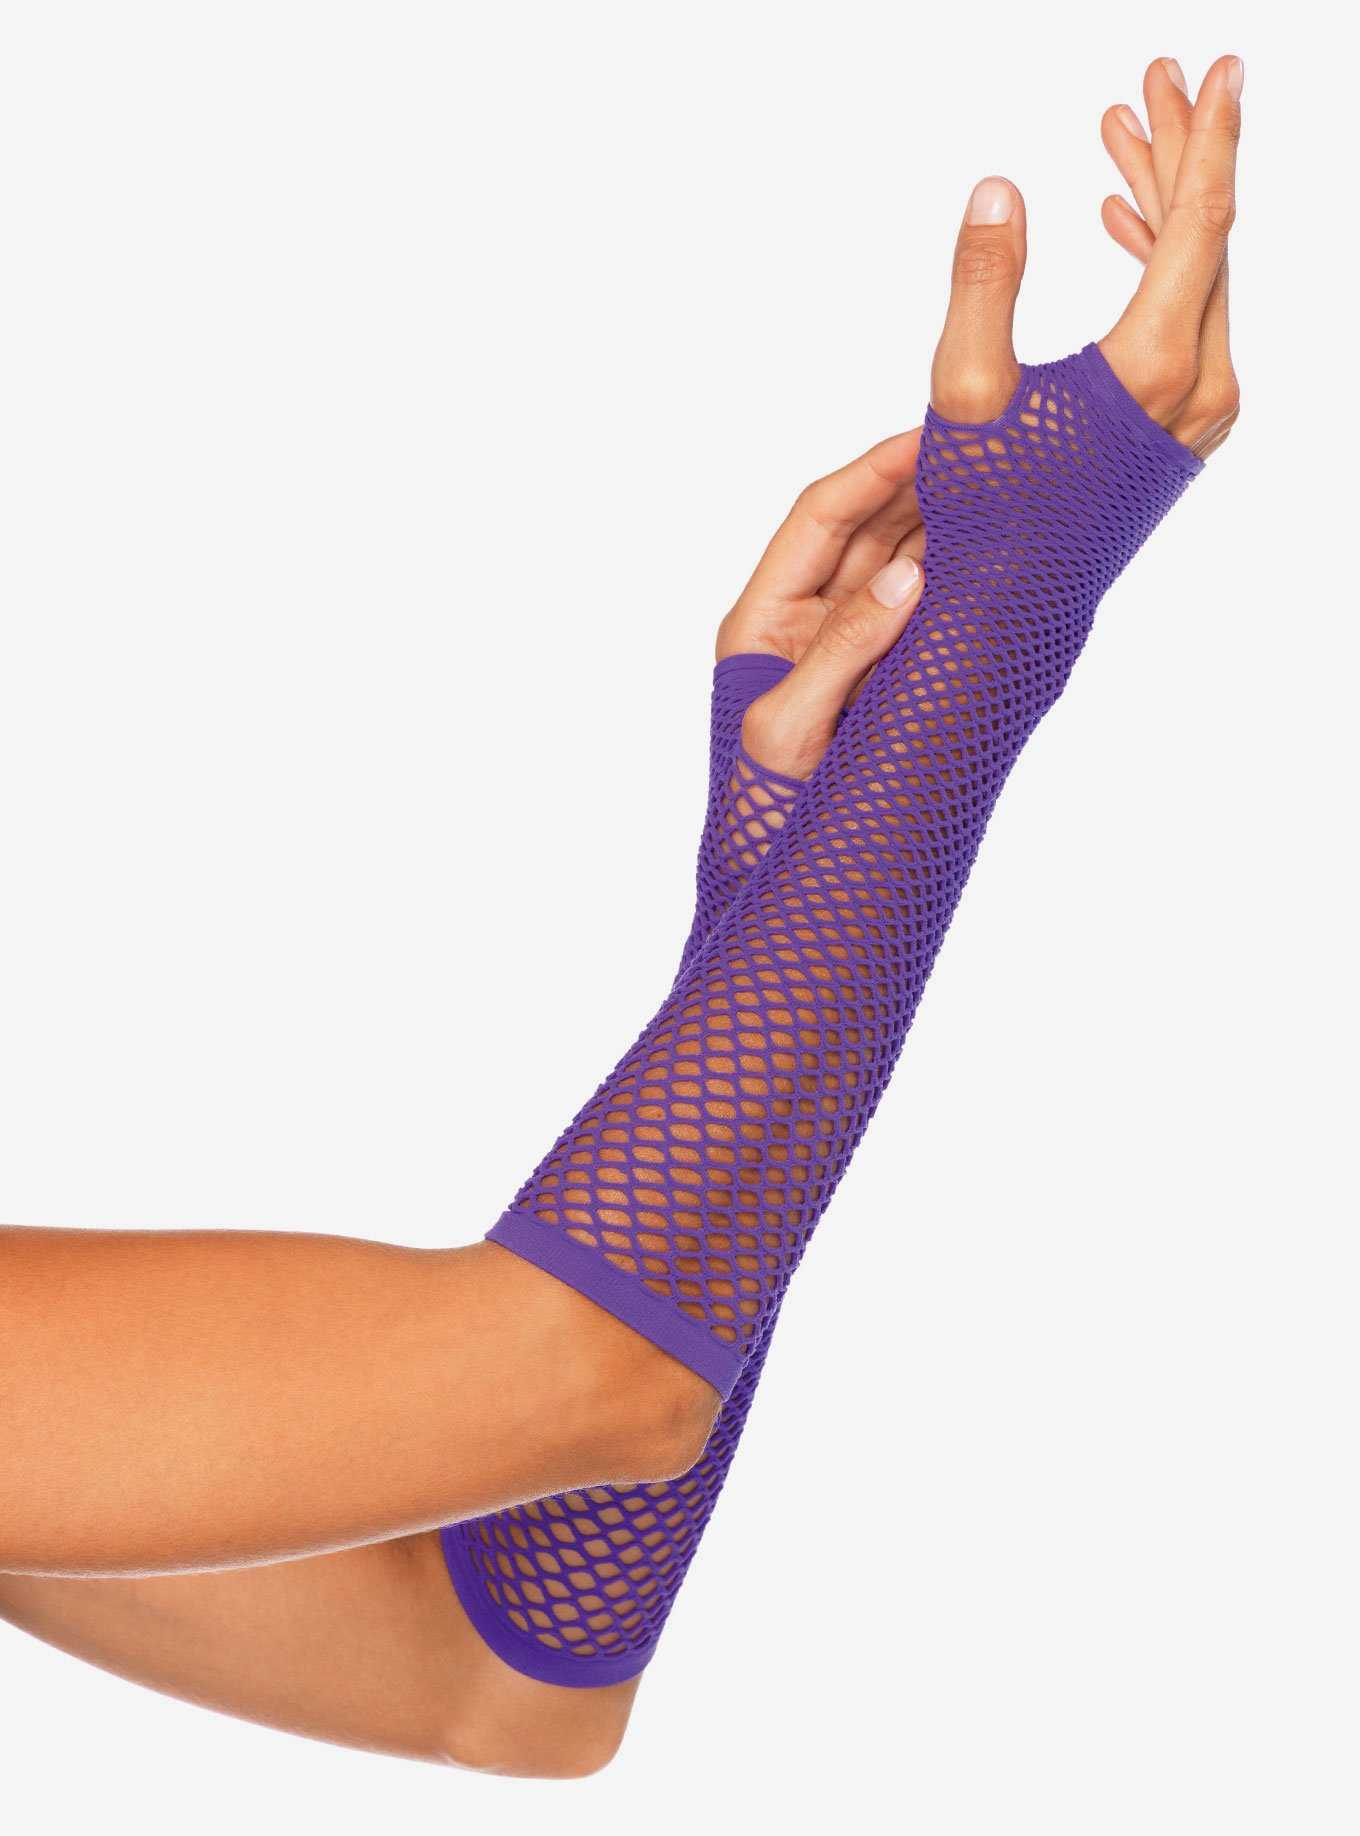 Triangle Net Fingerless Gloves Neon Purple, , hi-res